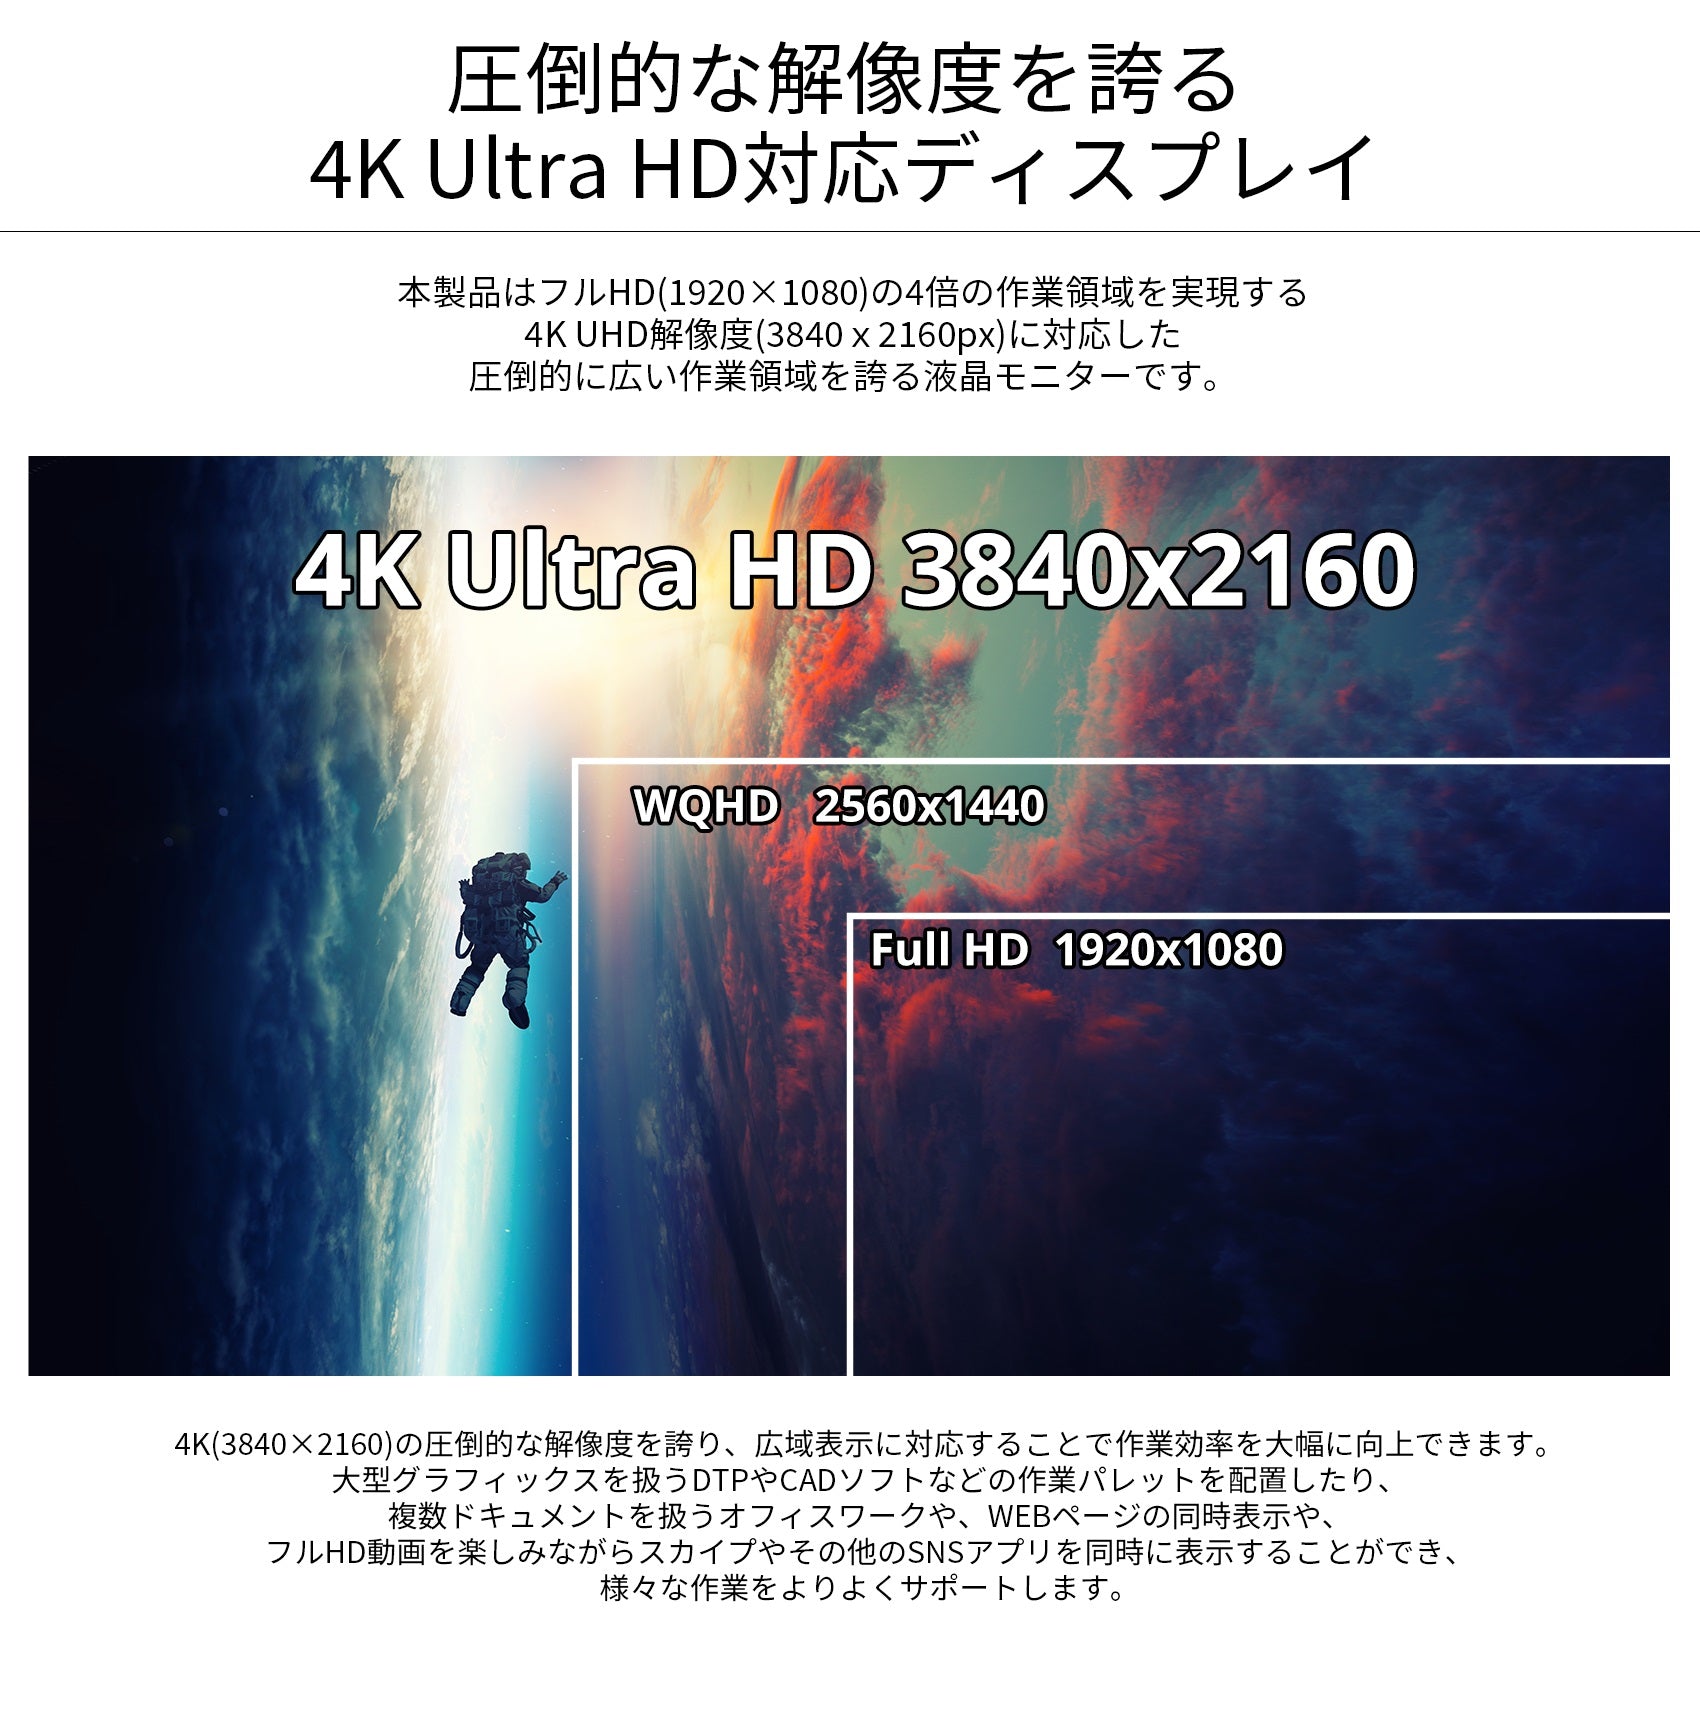 JAPANNEXT 31.5型 4K液晶モニター USB Type-C(最大65W給電対応） JN